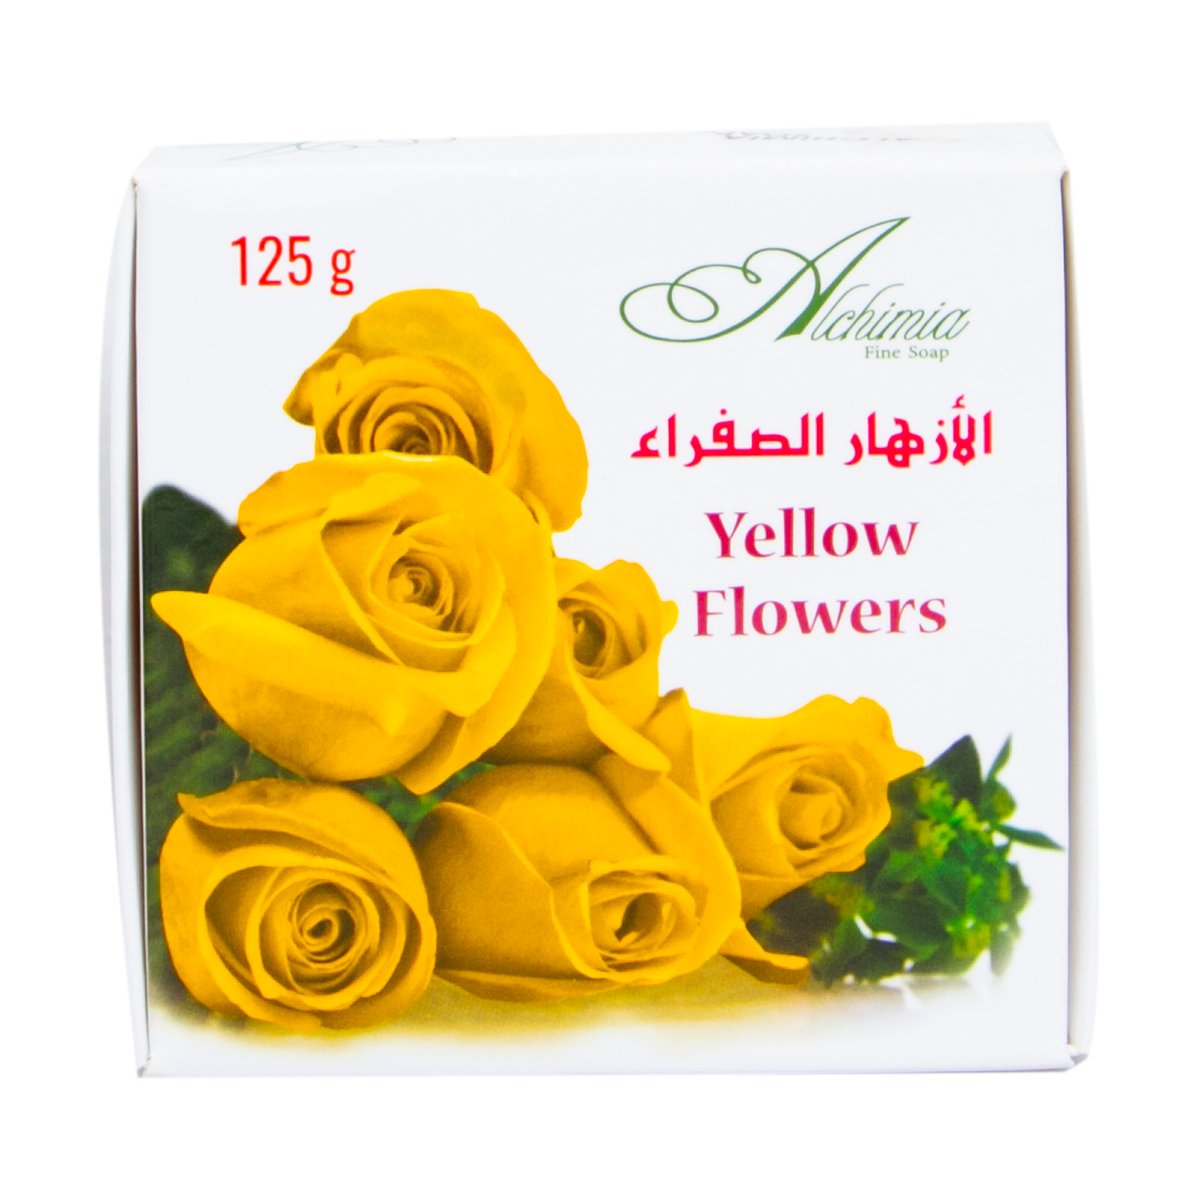 Alchimia Soap Yellow Flowers 125 g